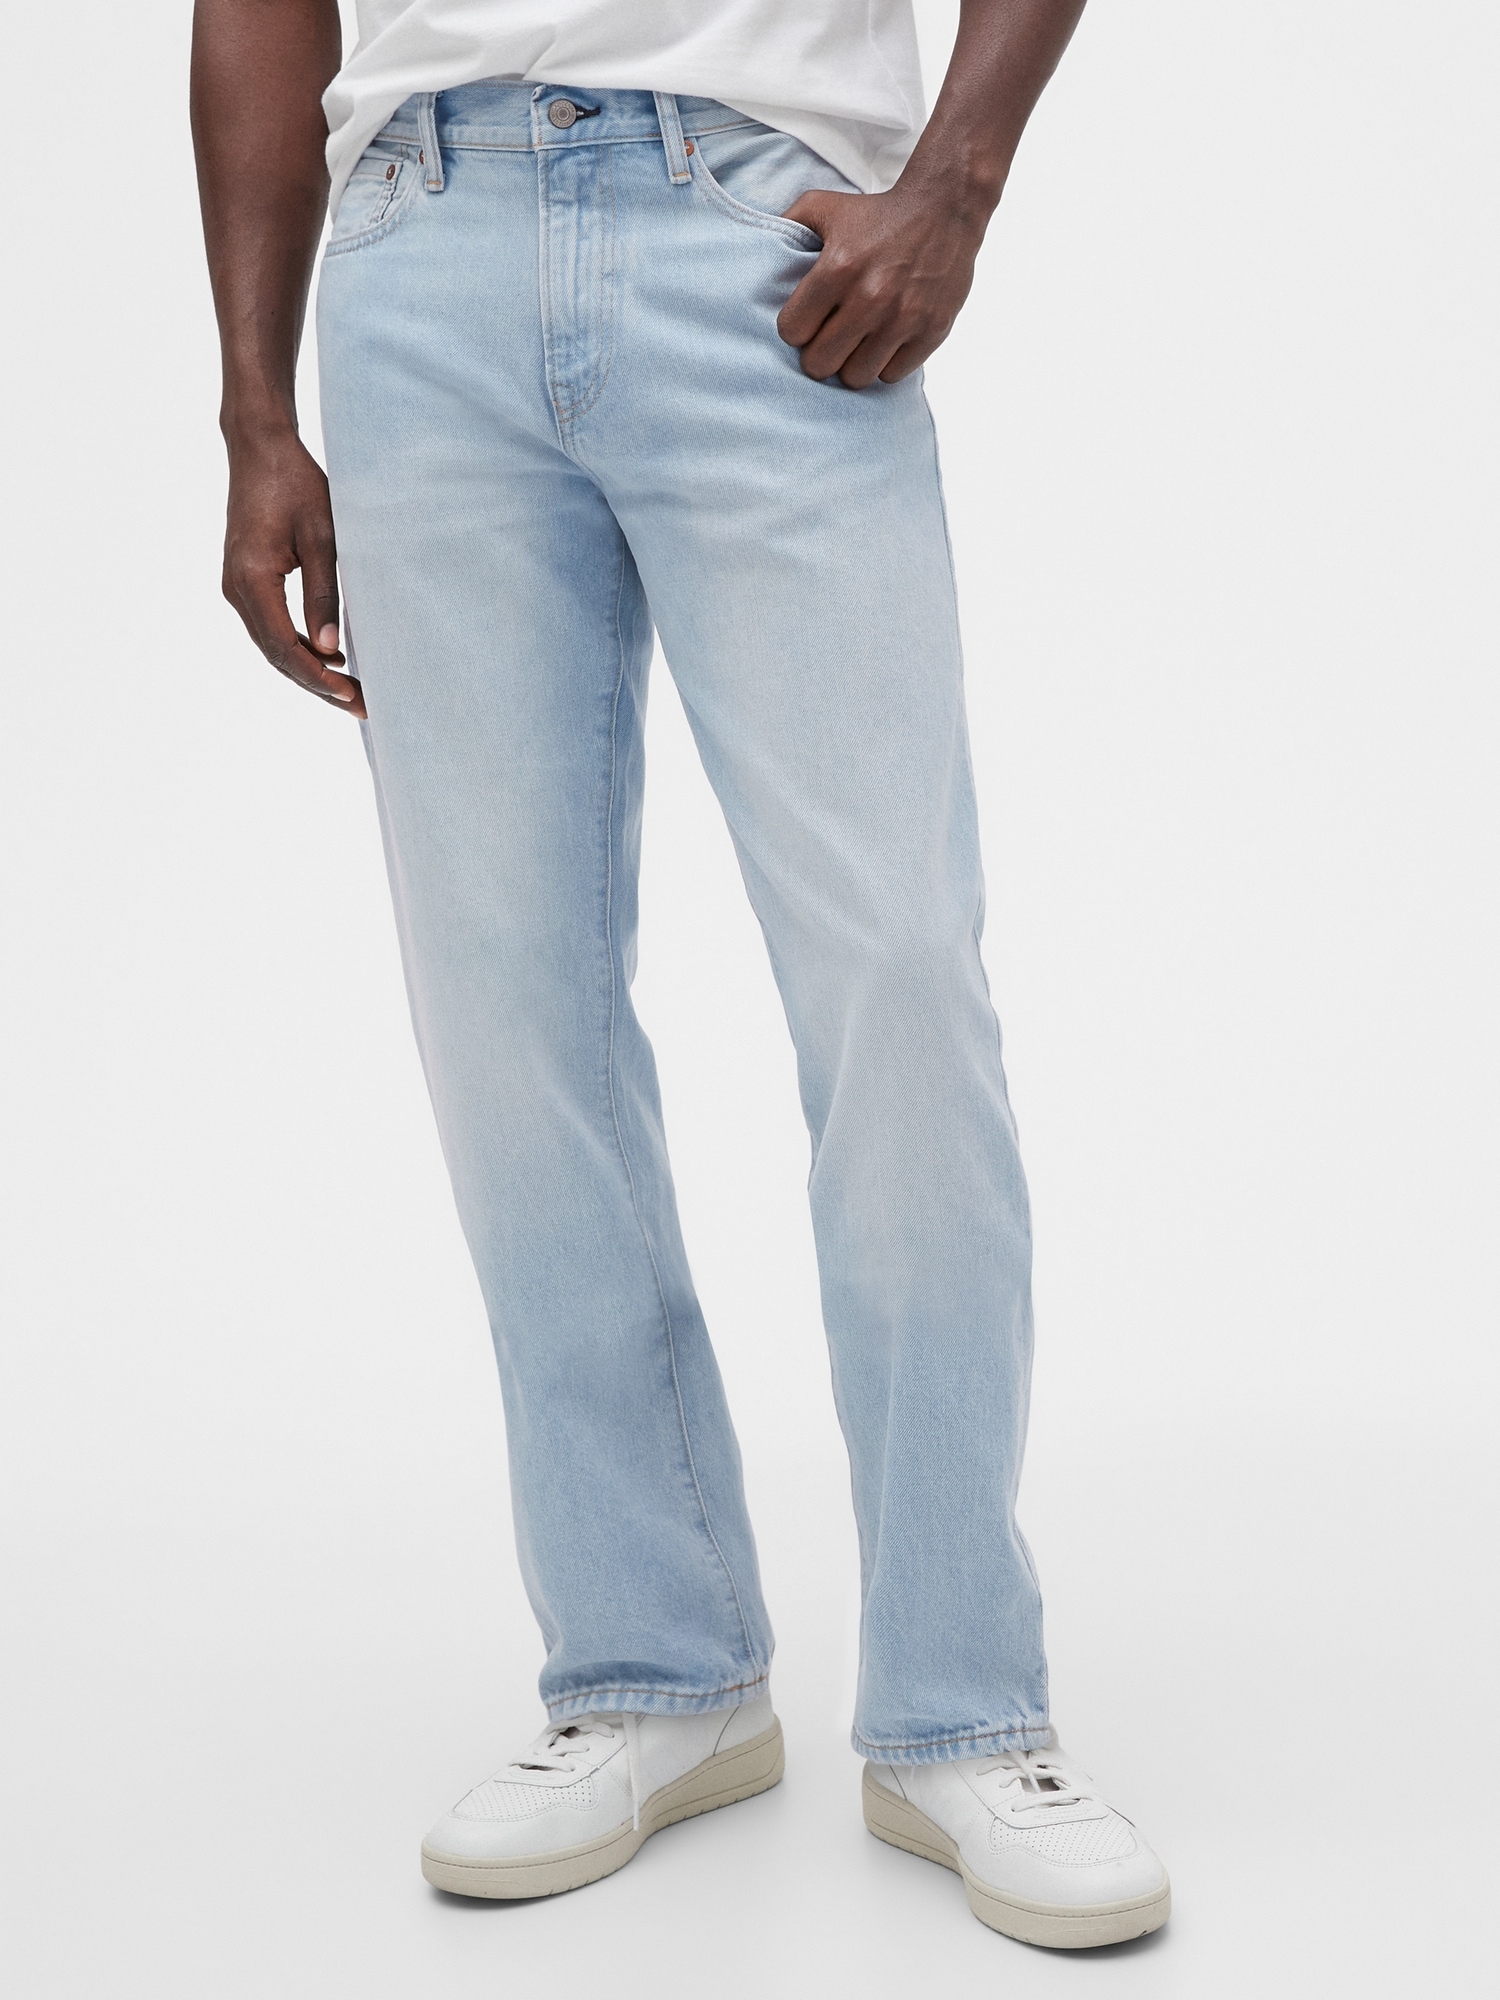 Gap  Straight jeans, Gap, Jeans